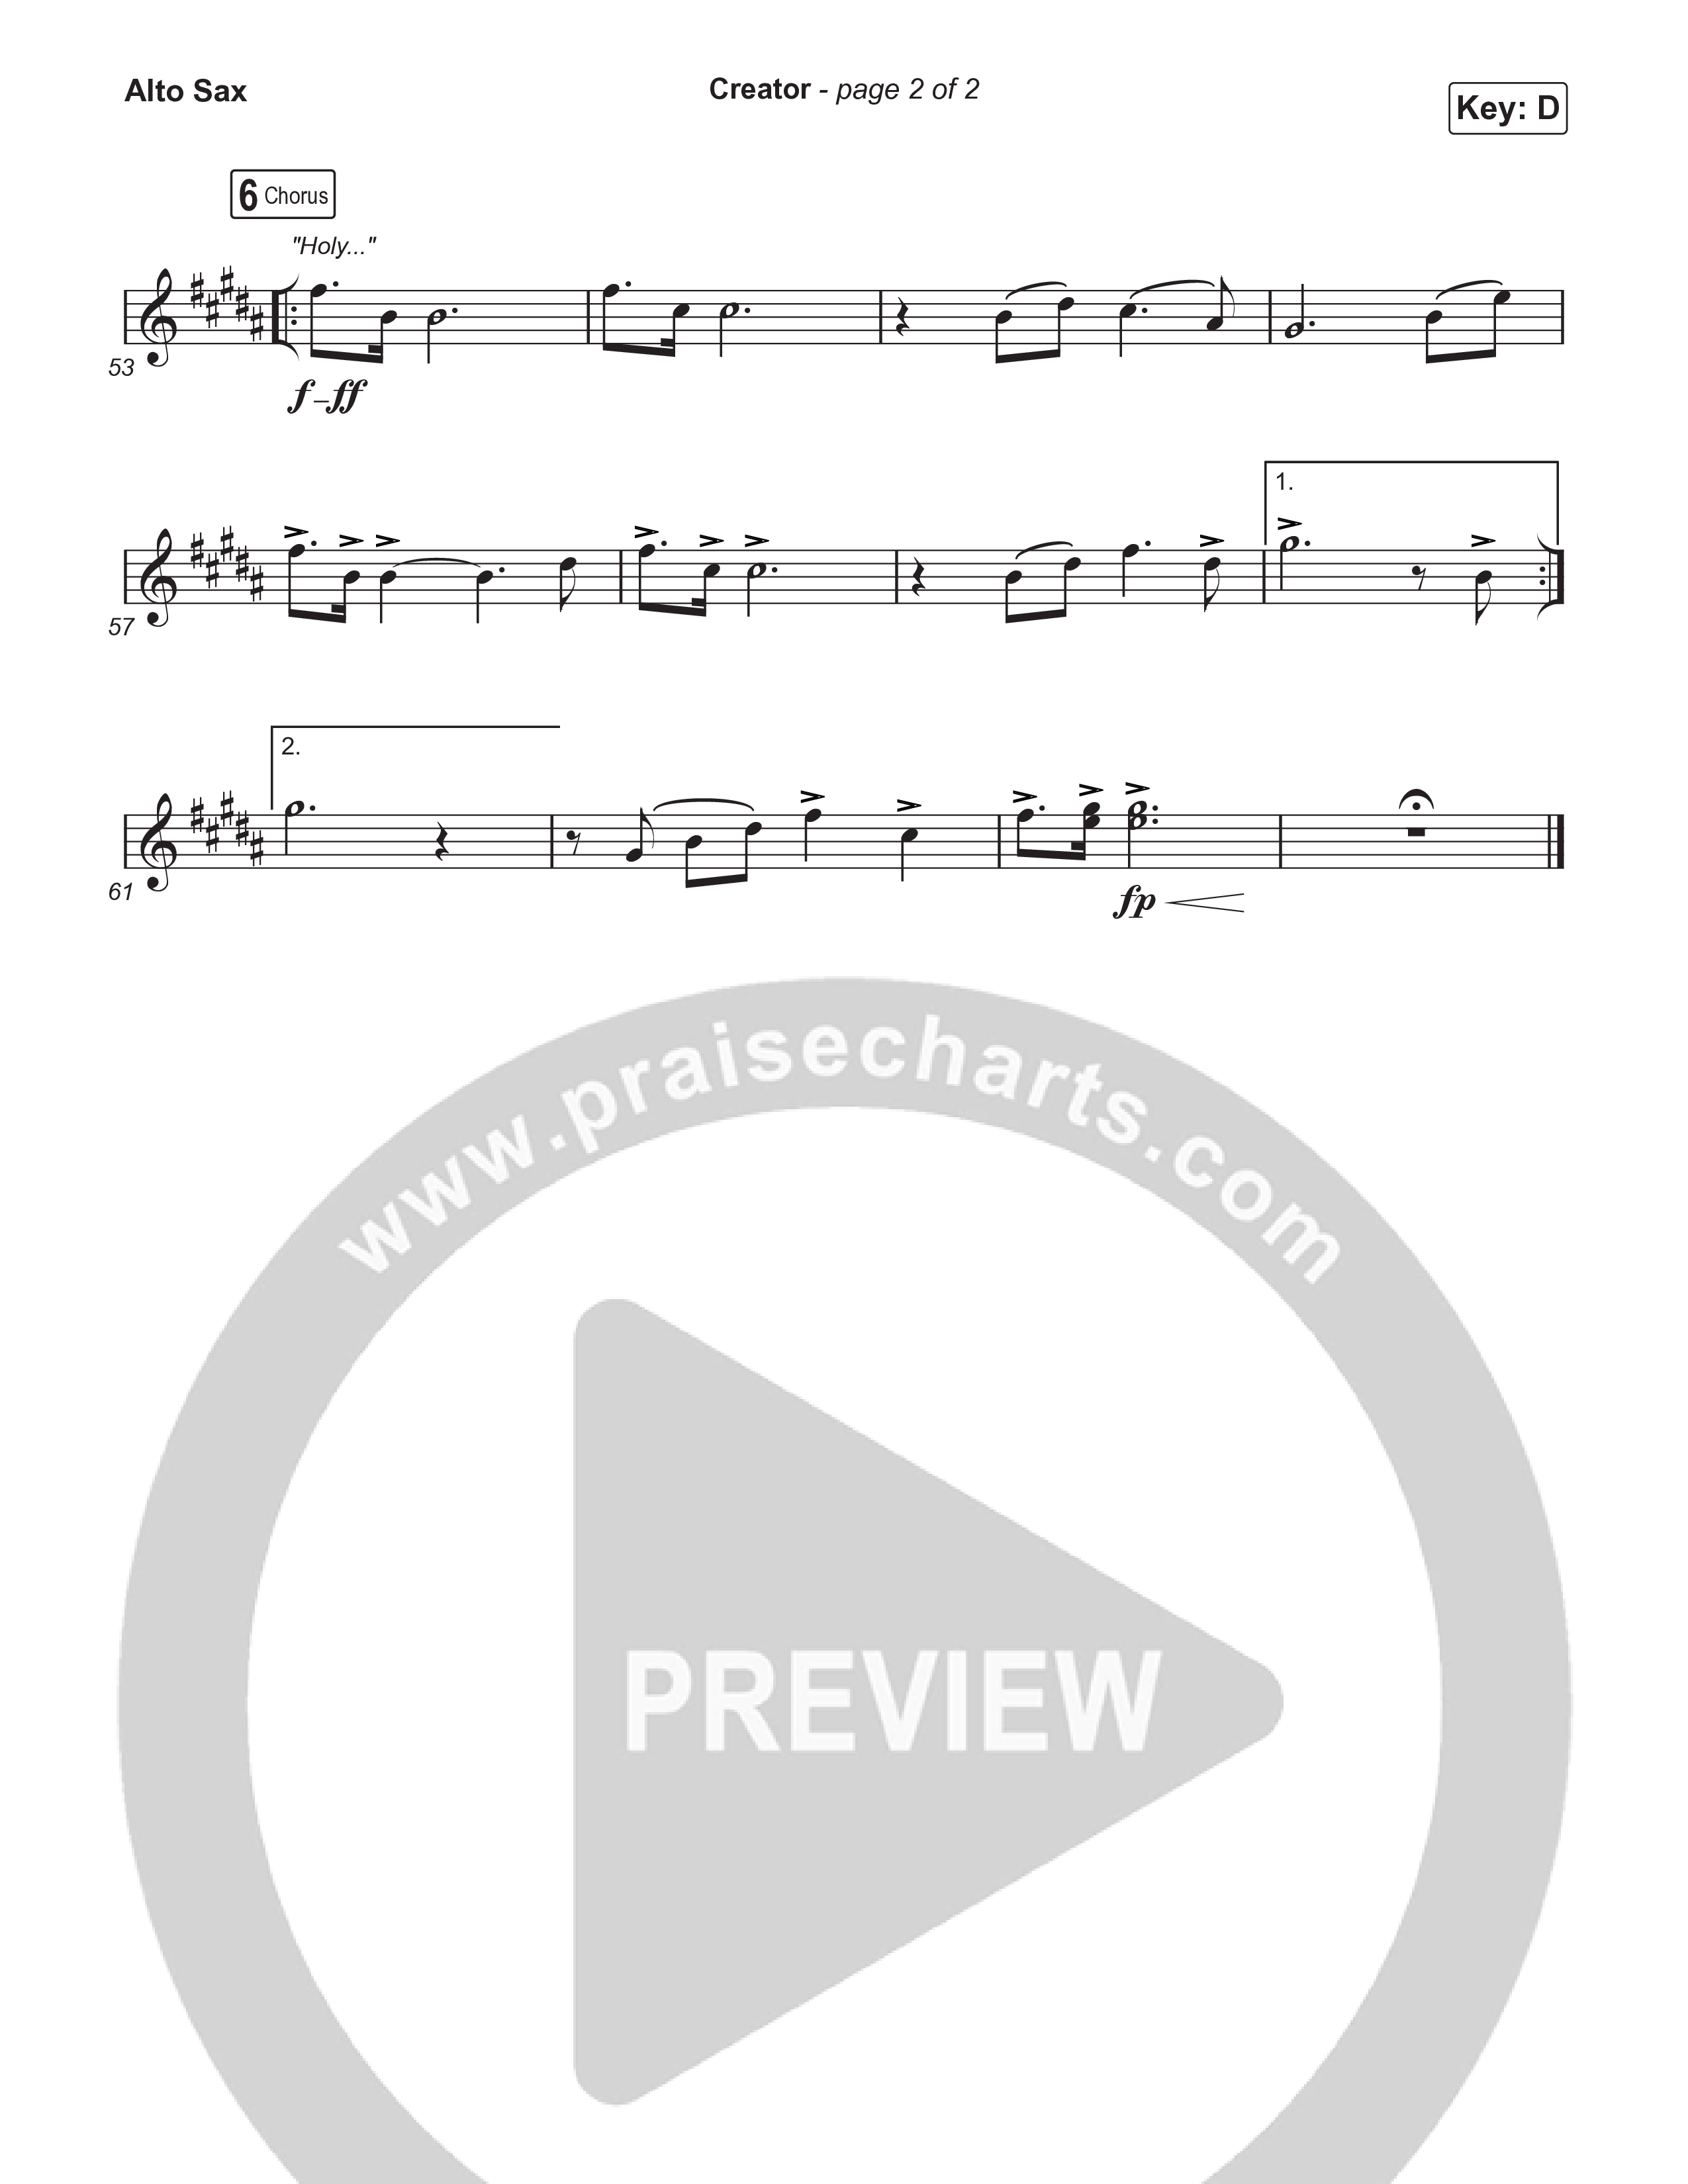 Creator (Choral Anthem SATB) Alto Sax (Phil Wickham / Arr. Mason Brown)